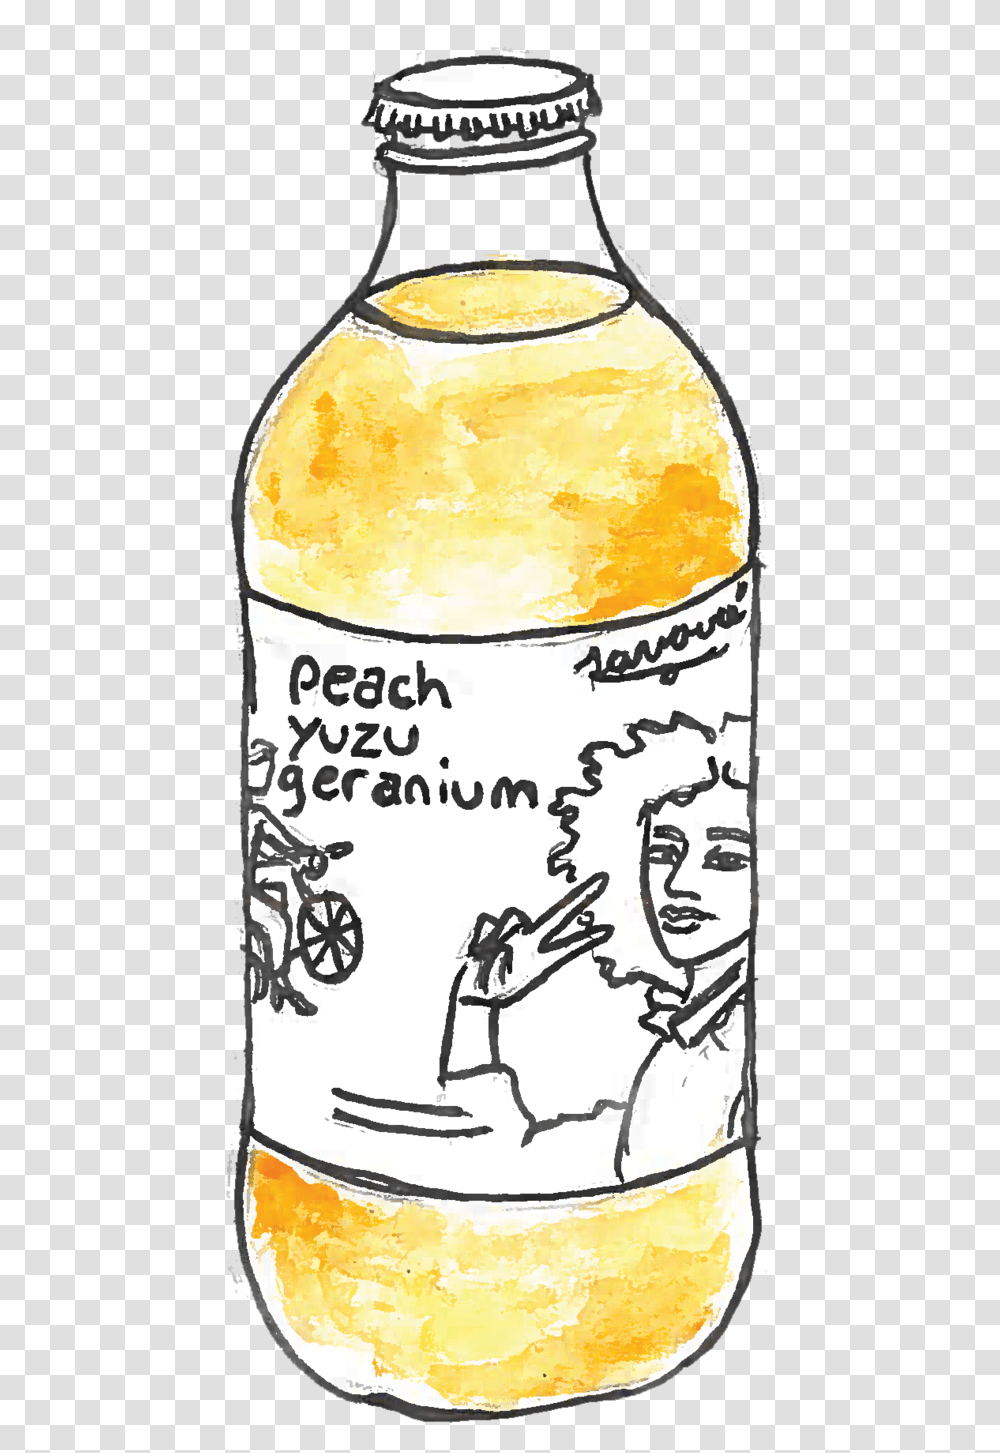 Peach Yuzu Geranium Soda Glass Bottle, Beverage, Drink, Alcohol, Liquor Transparent Png